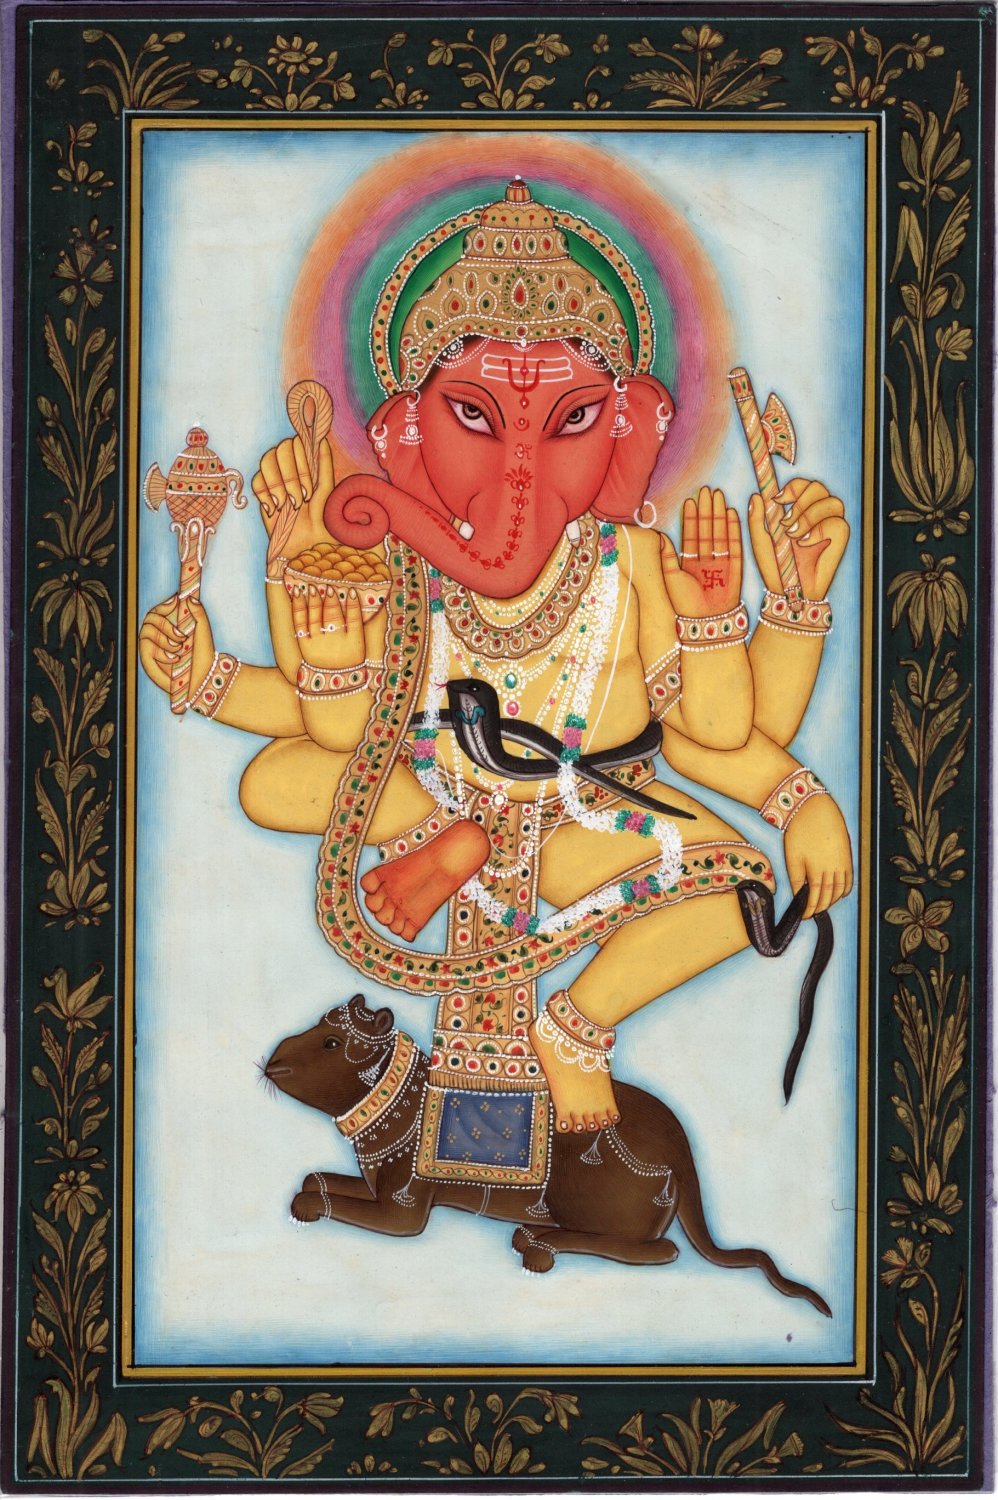 Ganesha Painting Handmade Indian Miniature Hindu Ethnic Religion Ganesh God Art